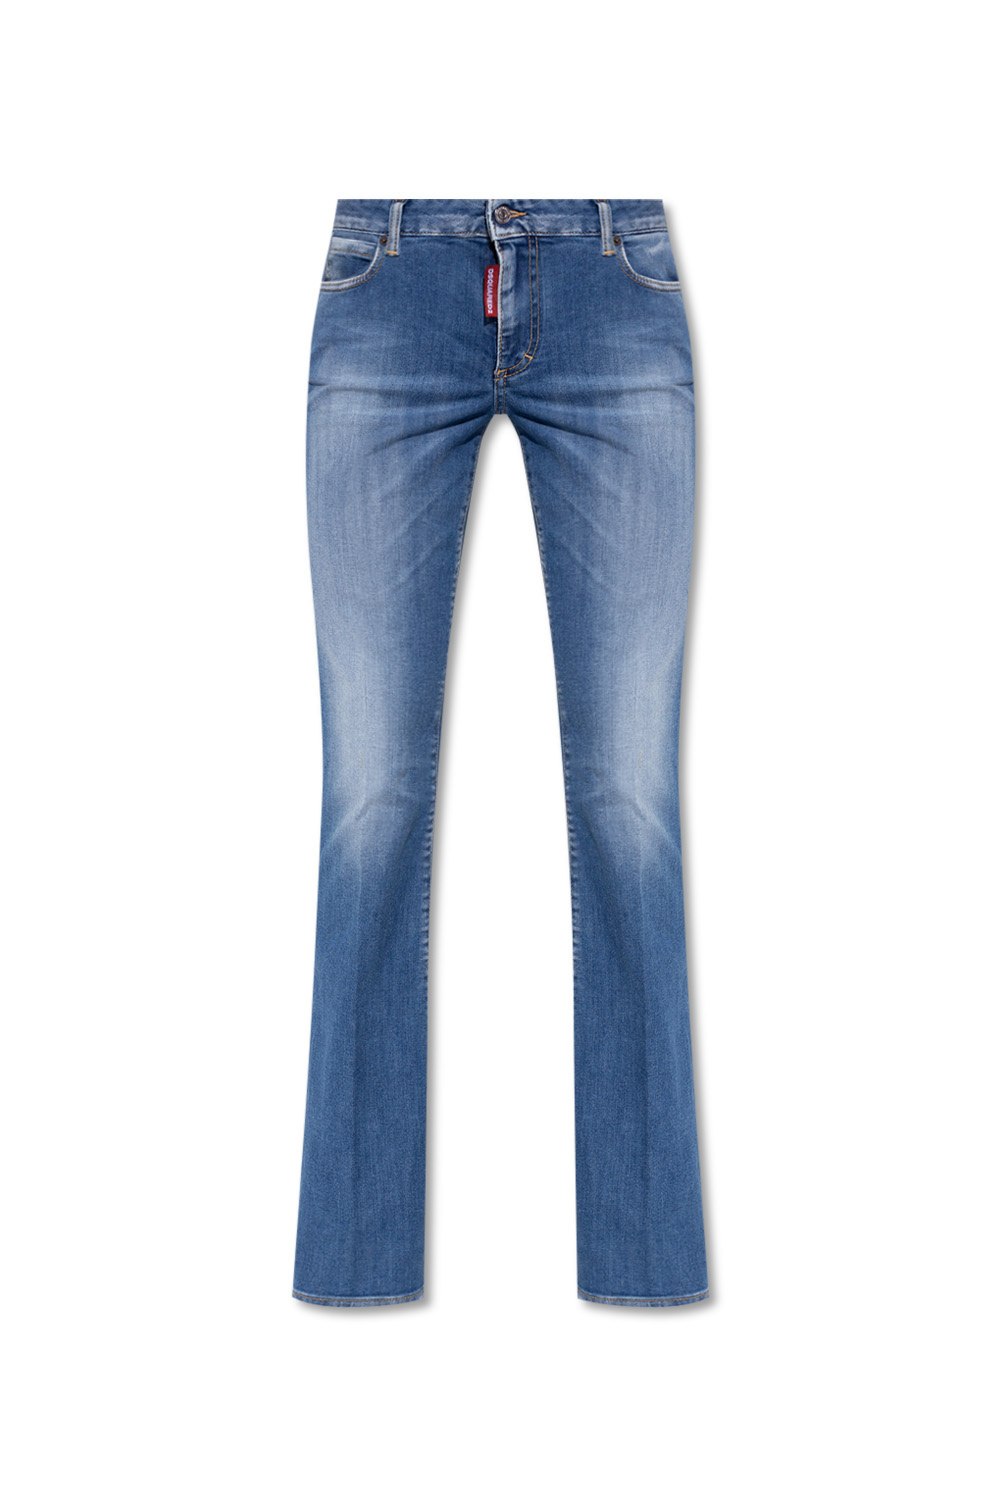 Dsquared2 'Medium Waist Flare Jean' jeans | Women's Clothing | Vitkac